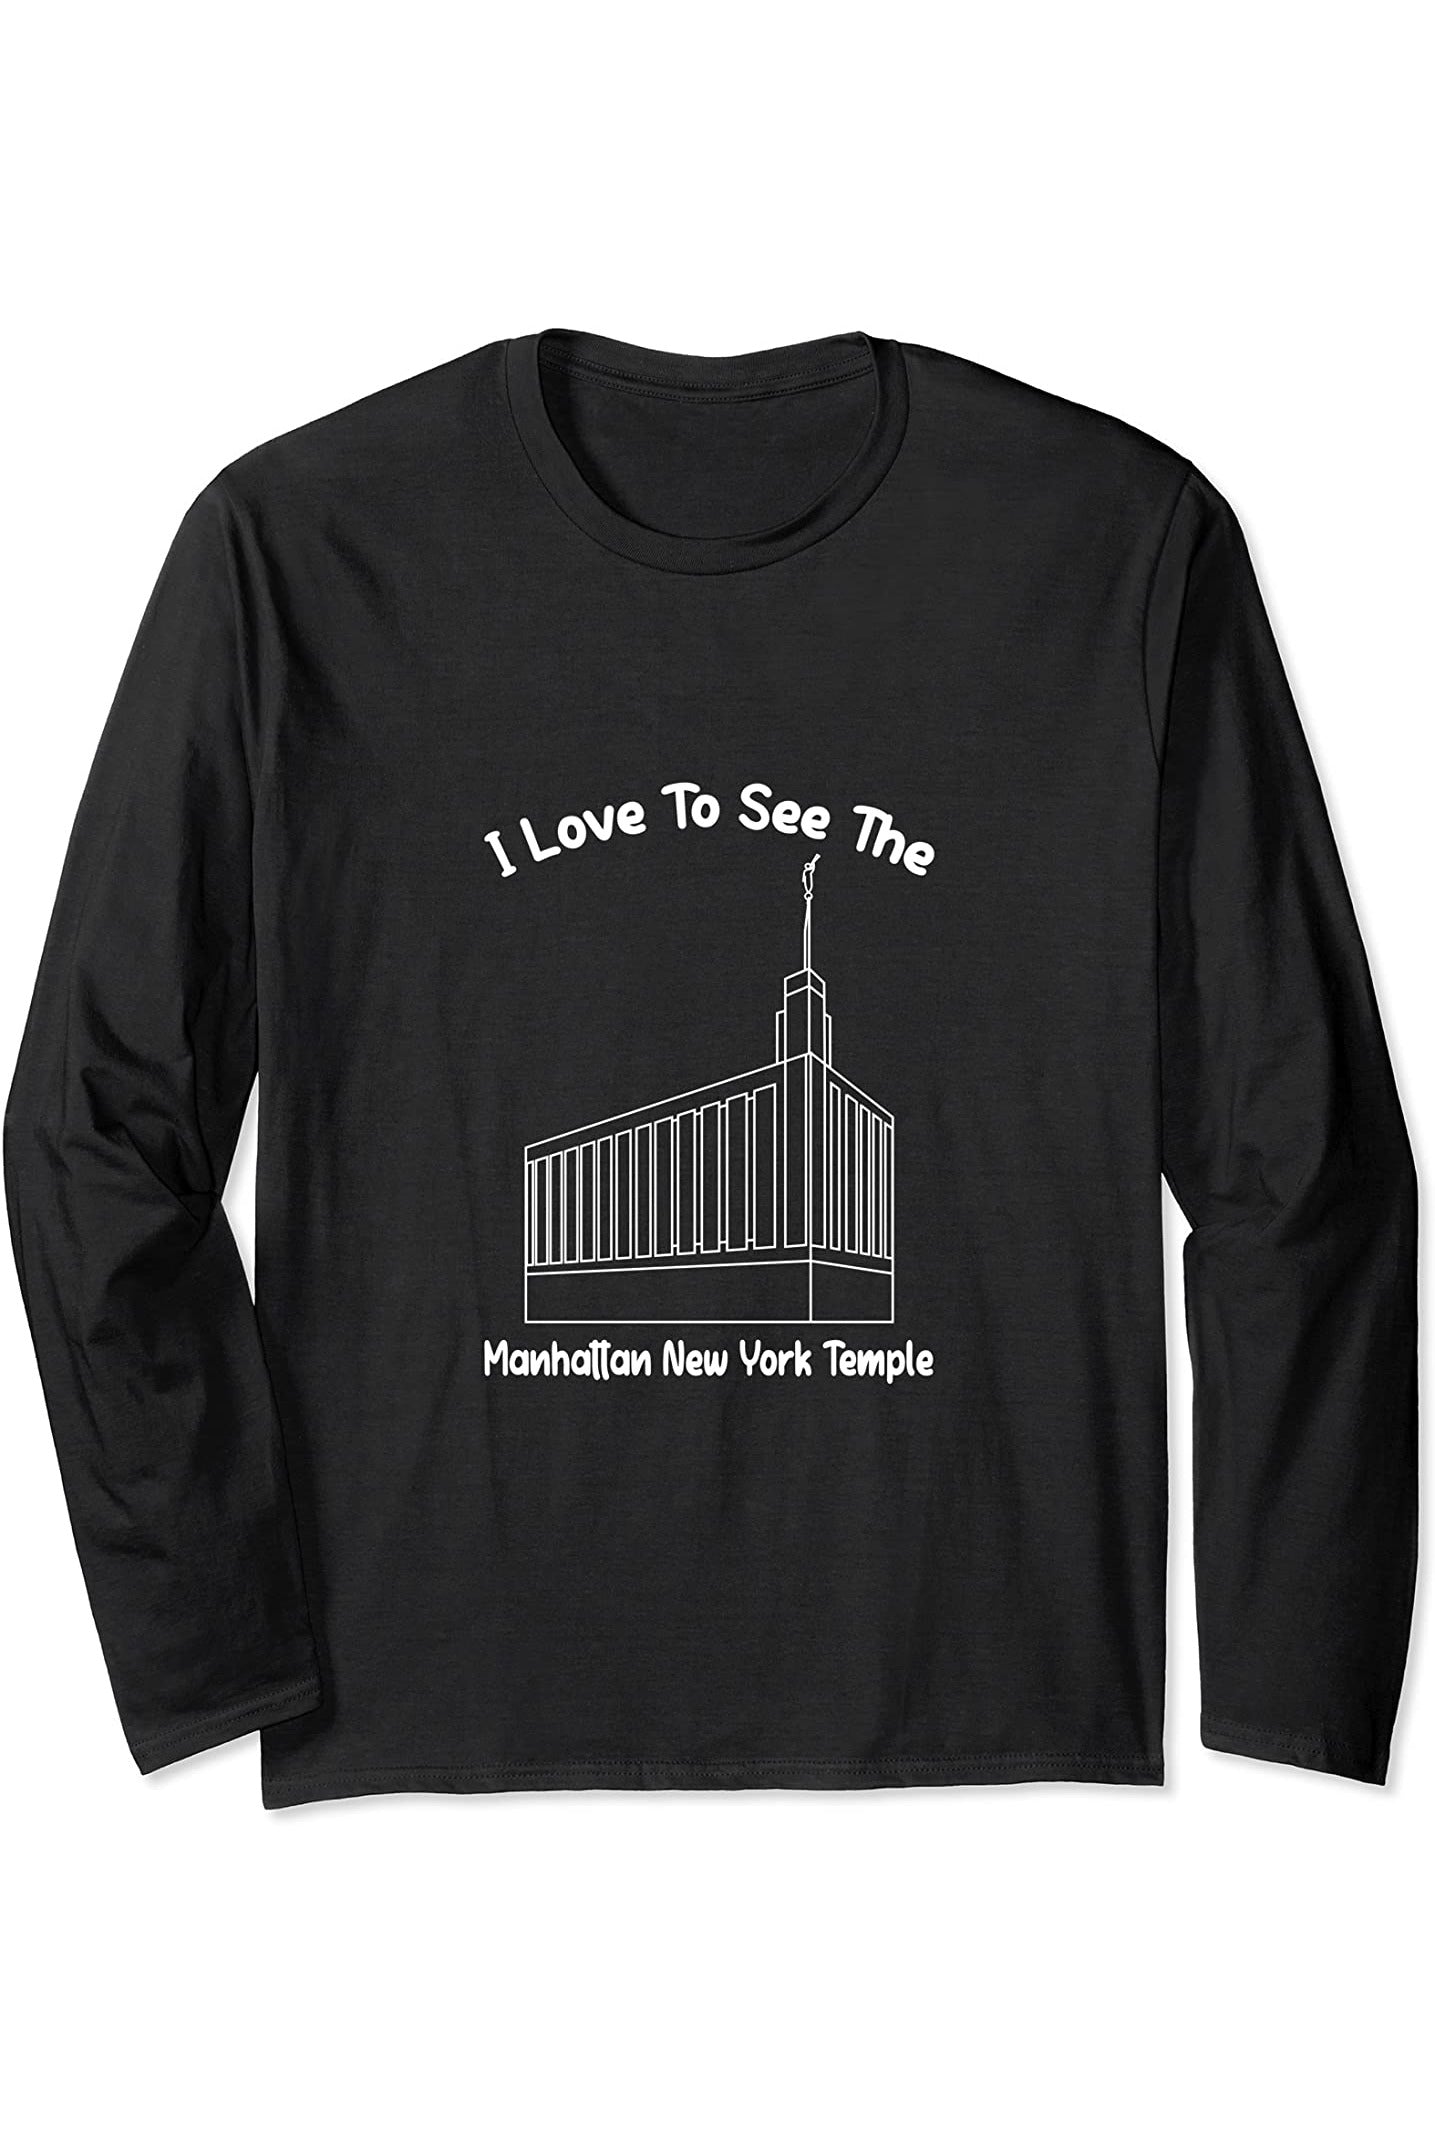 Manhattan New York Temple Long Sleeve T-Shirt - Primary Style (English) US